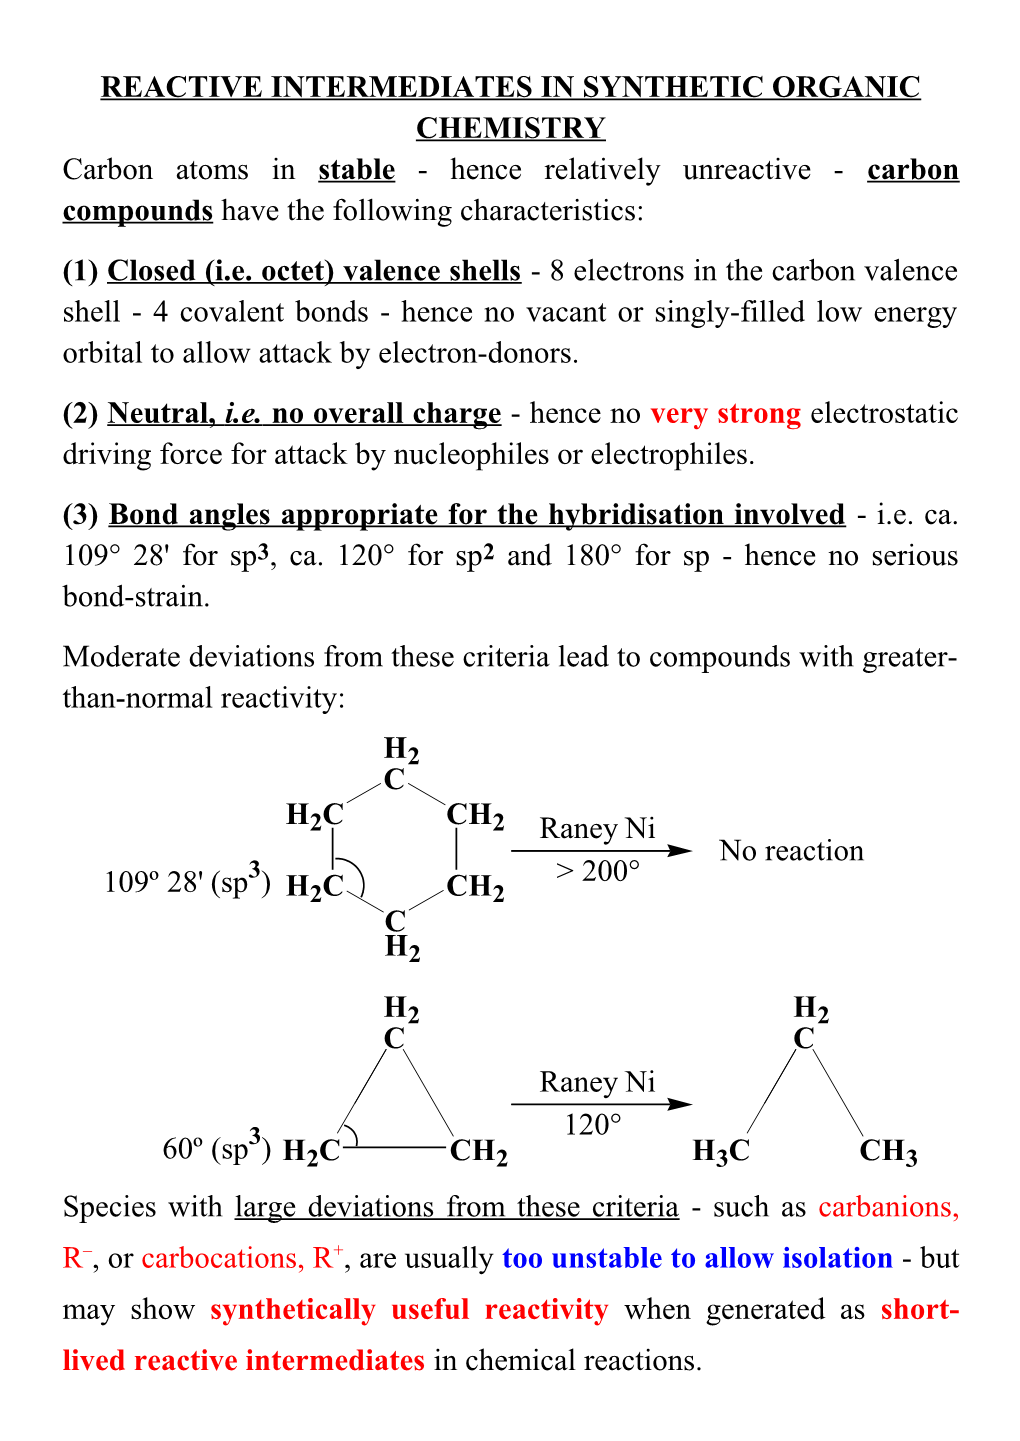 Reactive Intermediates in Synthetic Organic Chemistry